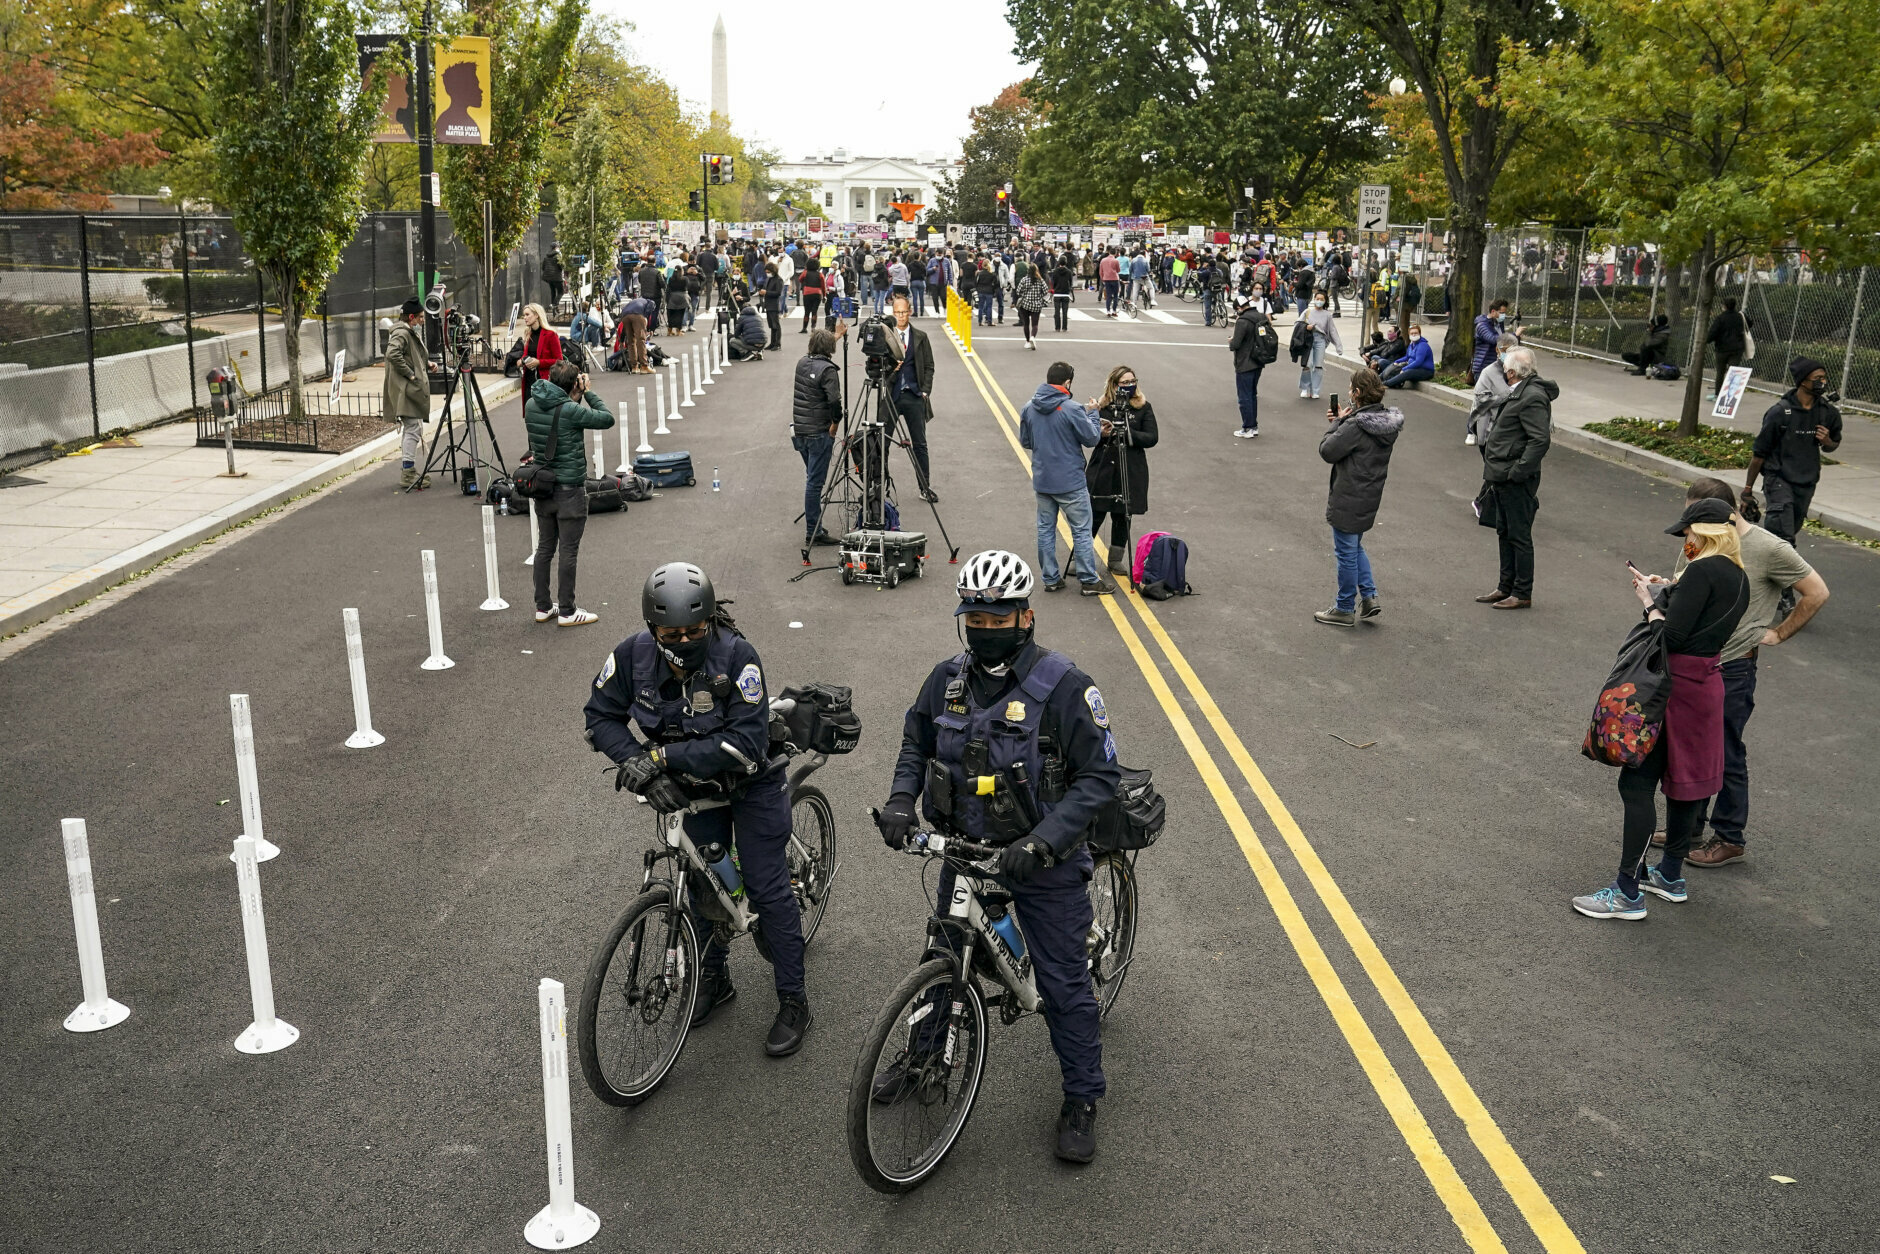 District of Columbia Metropolitan Police stand watch as demonstrators gather outside the White House, Tuesday, Nov. 3, 2020, in Washington. (AP Photo/John Minchillo)